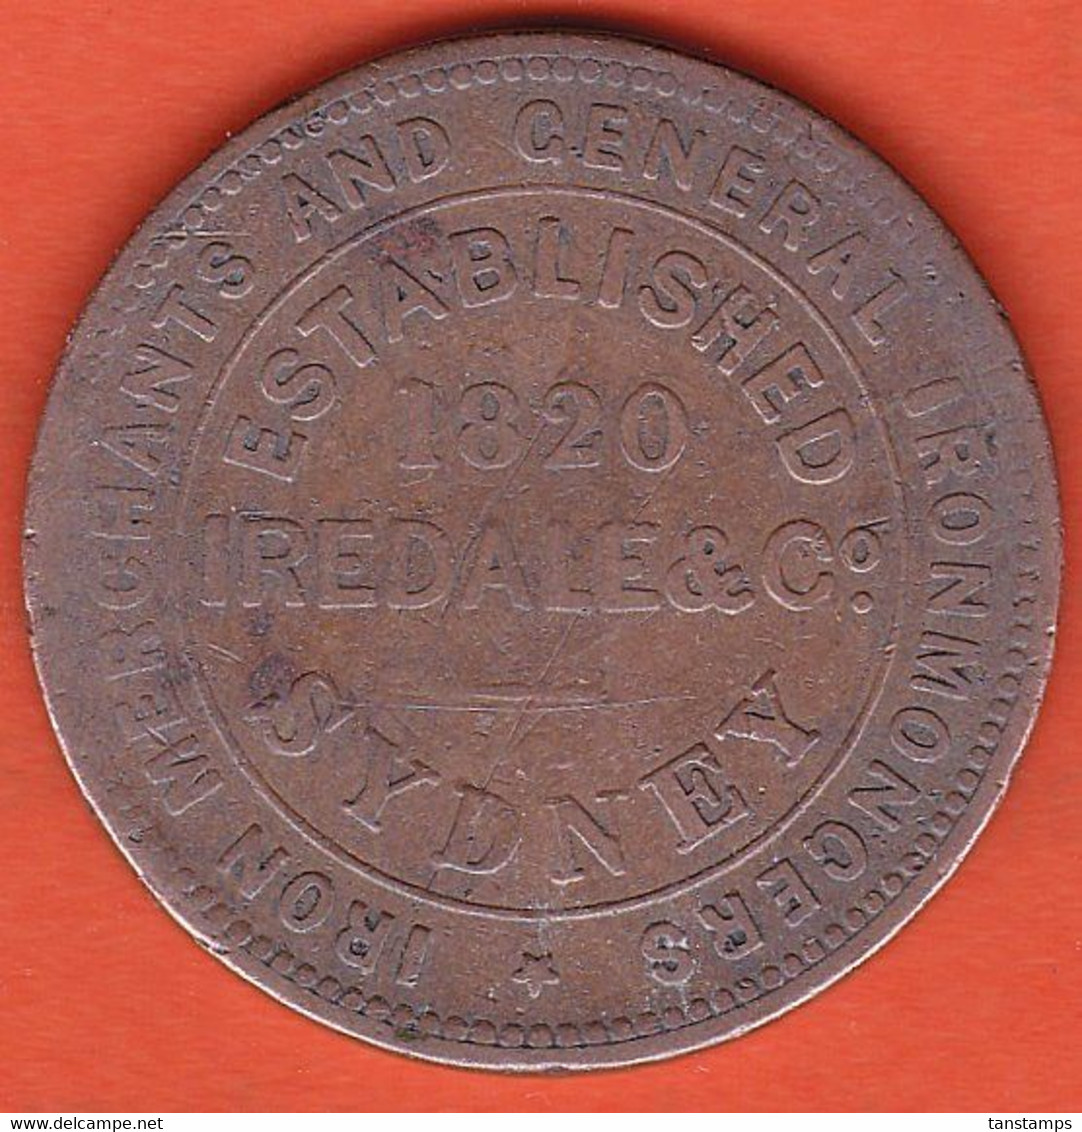 Australia IREDALE & Co Sydney Tradesman's Penny Token 1850s - New South Wales